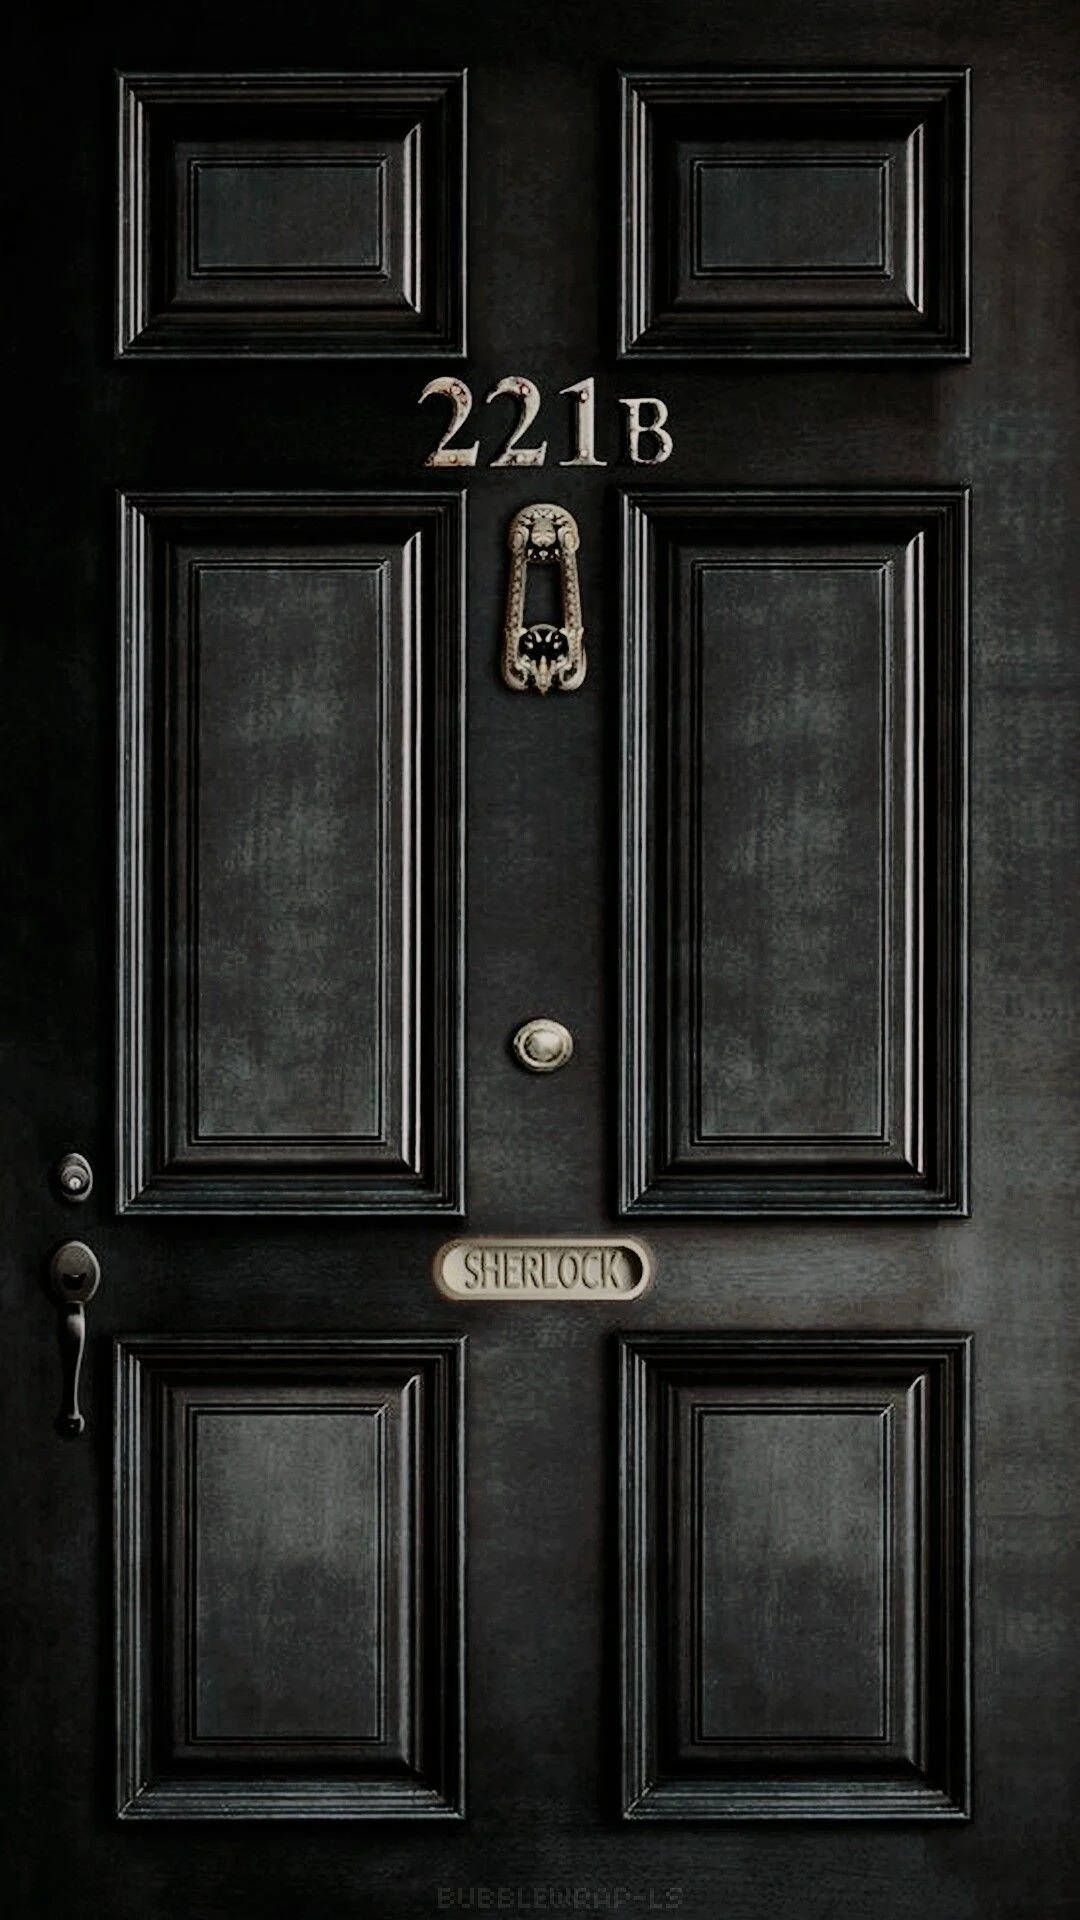 8K iPhone 221B Baker Street Sherlock Holmes Wallpaper